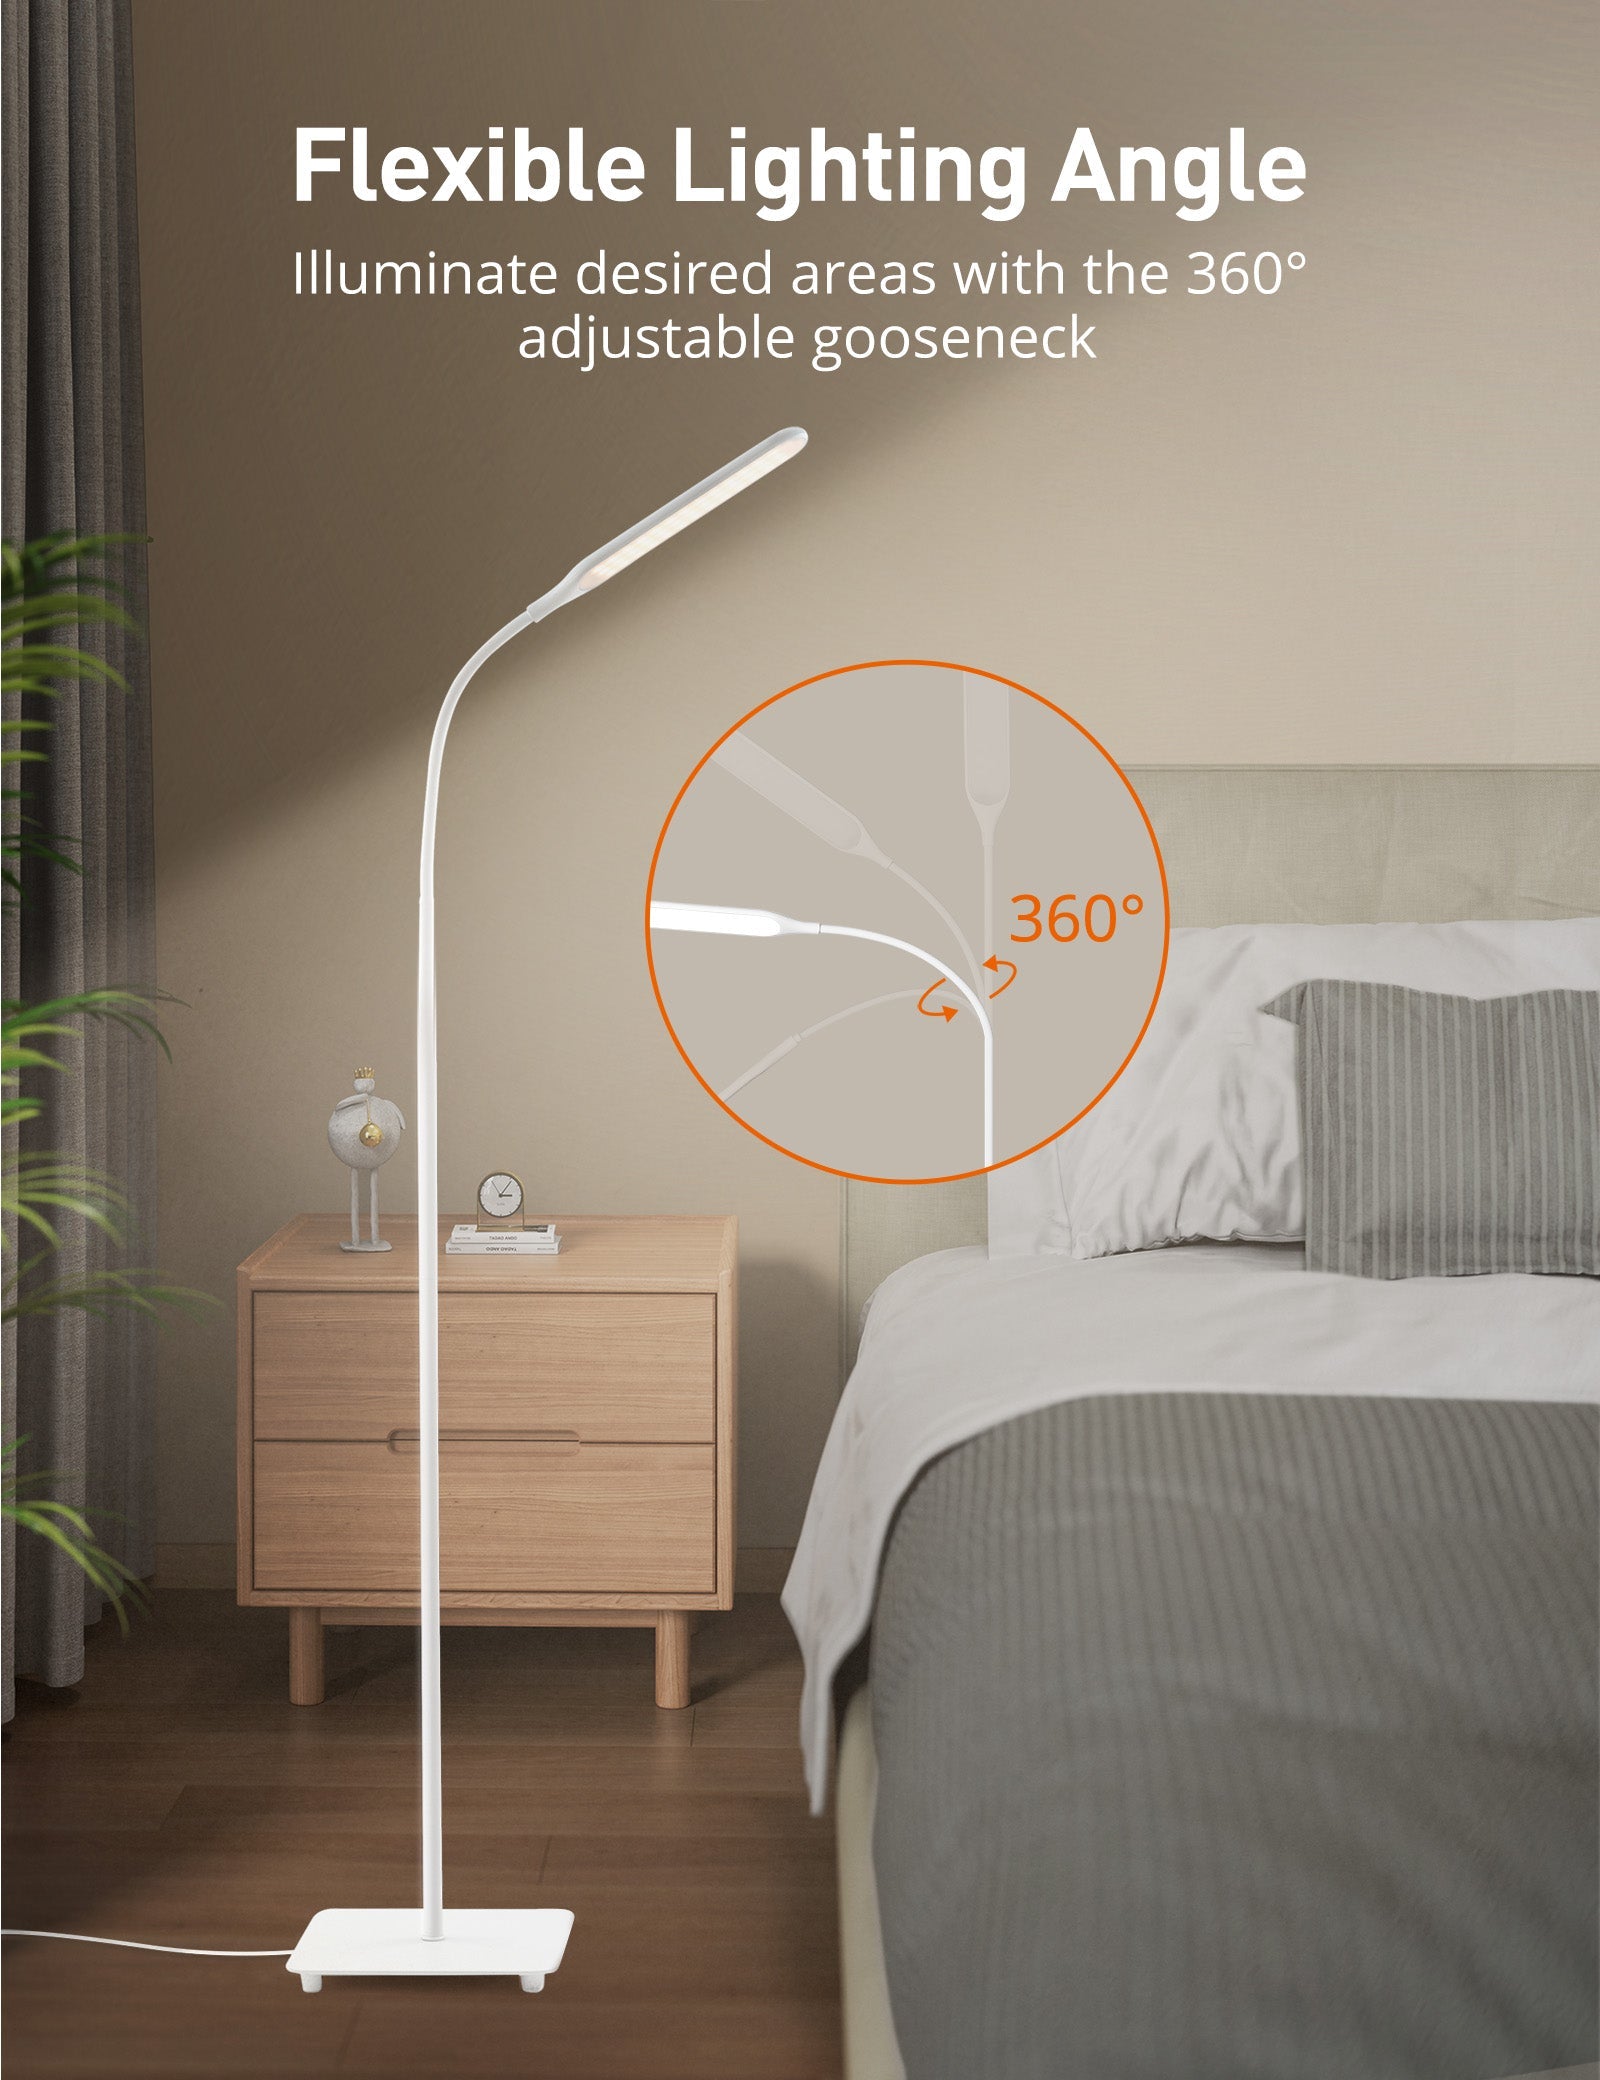 LED floor lamp with adjustable gooseneck, high adjustable pole